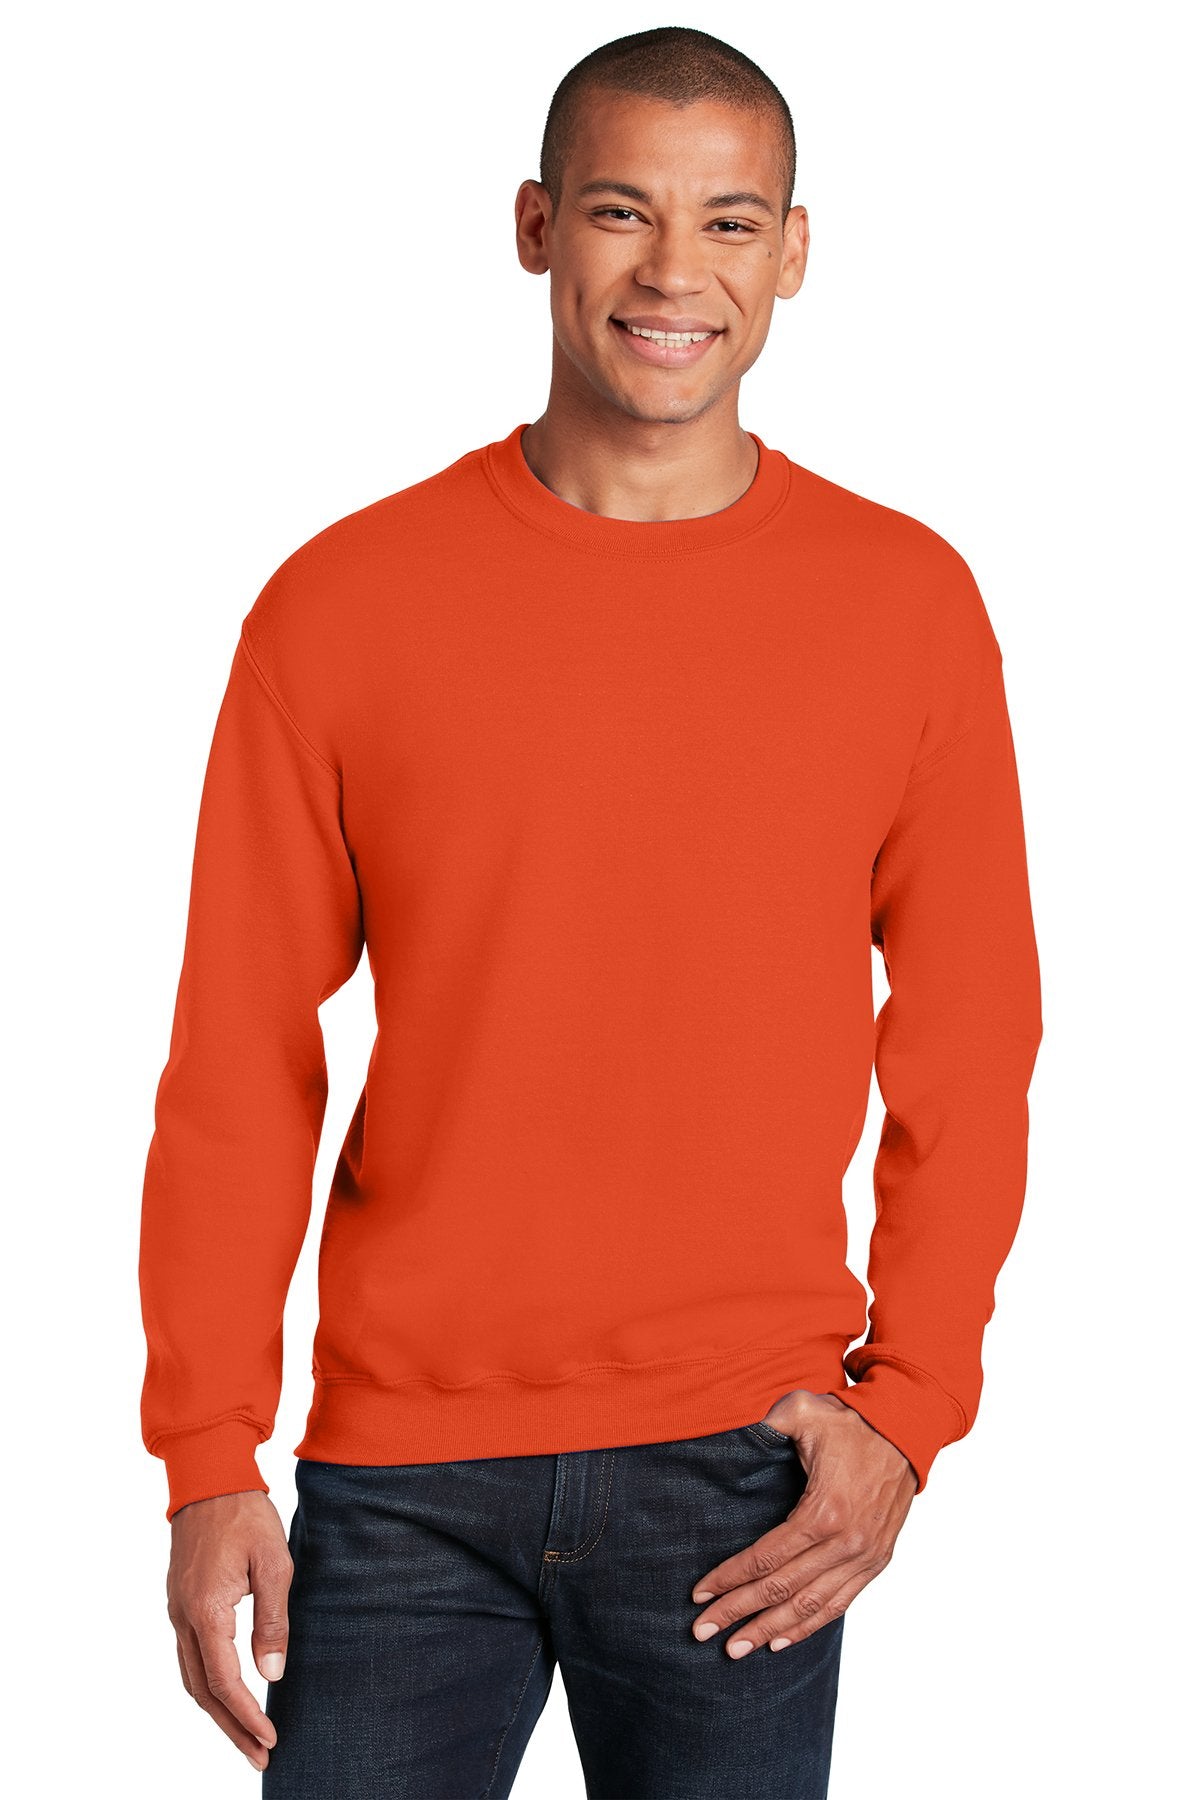 Gildan Orange 18000 sweatshirts with logos